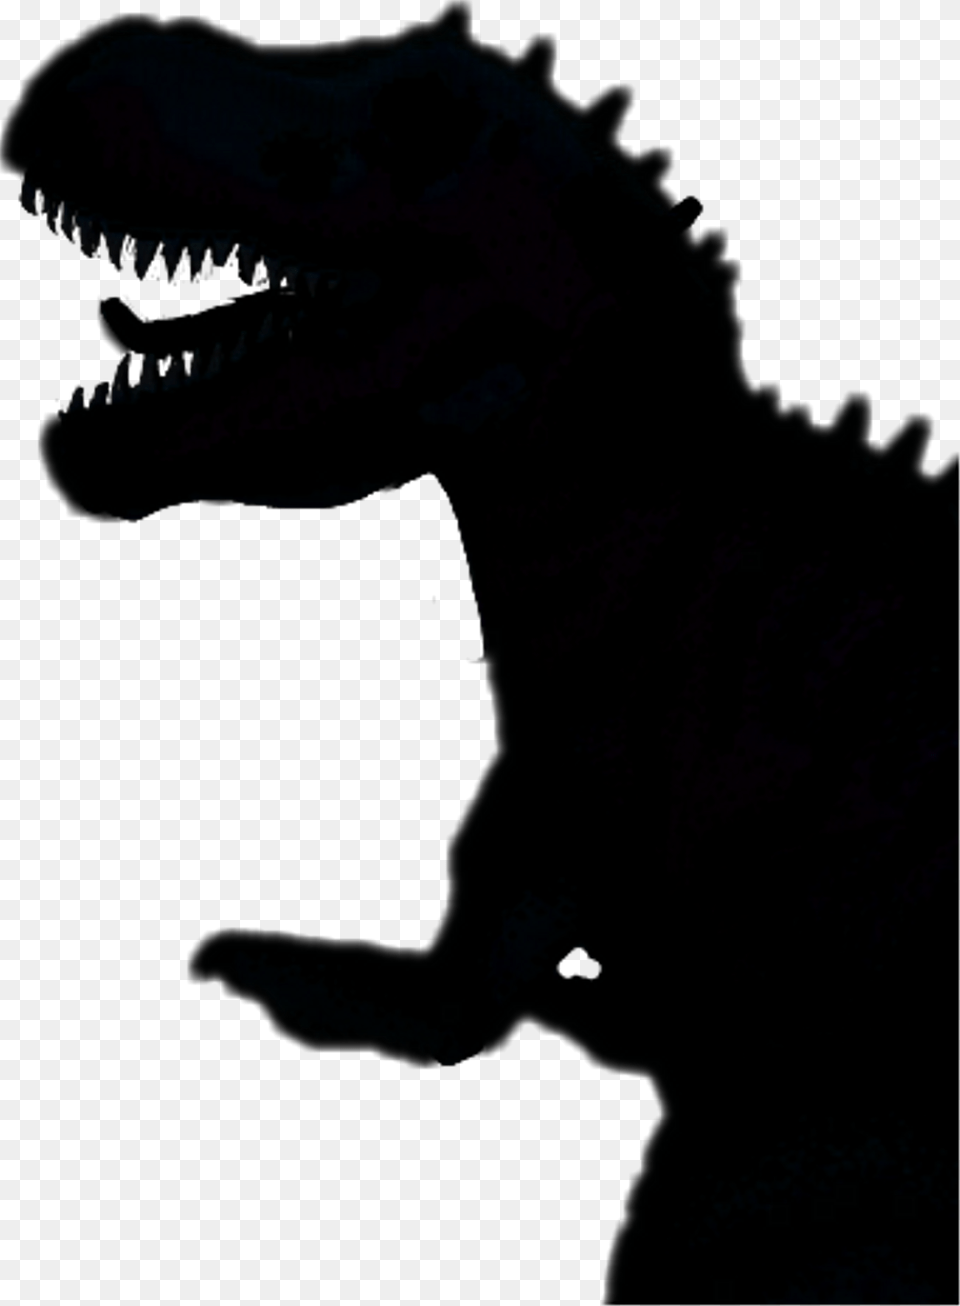 Ftesilhouette T Rex Trex Dinosaur Silhouette Black T Rex Transparent Silhouette, Animal, Reptile, T-rex Free Png